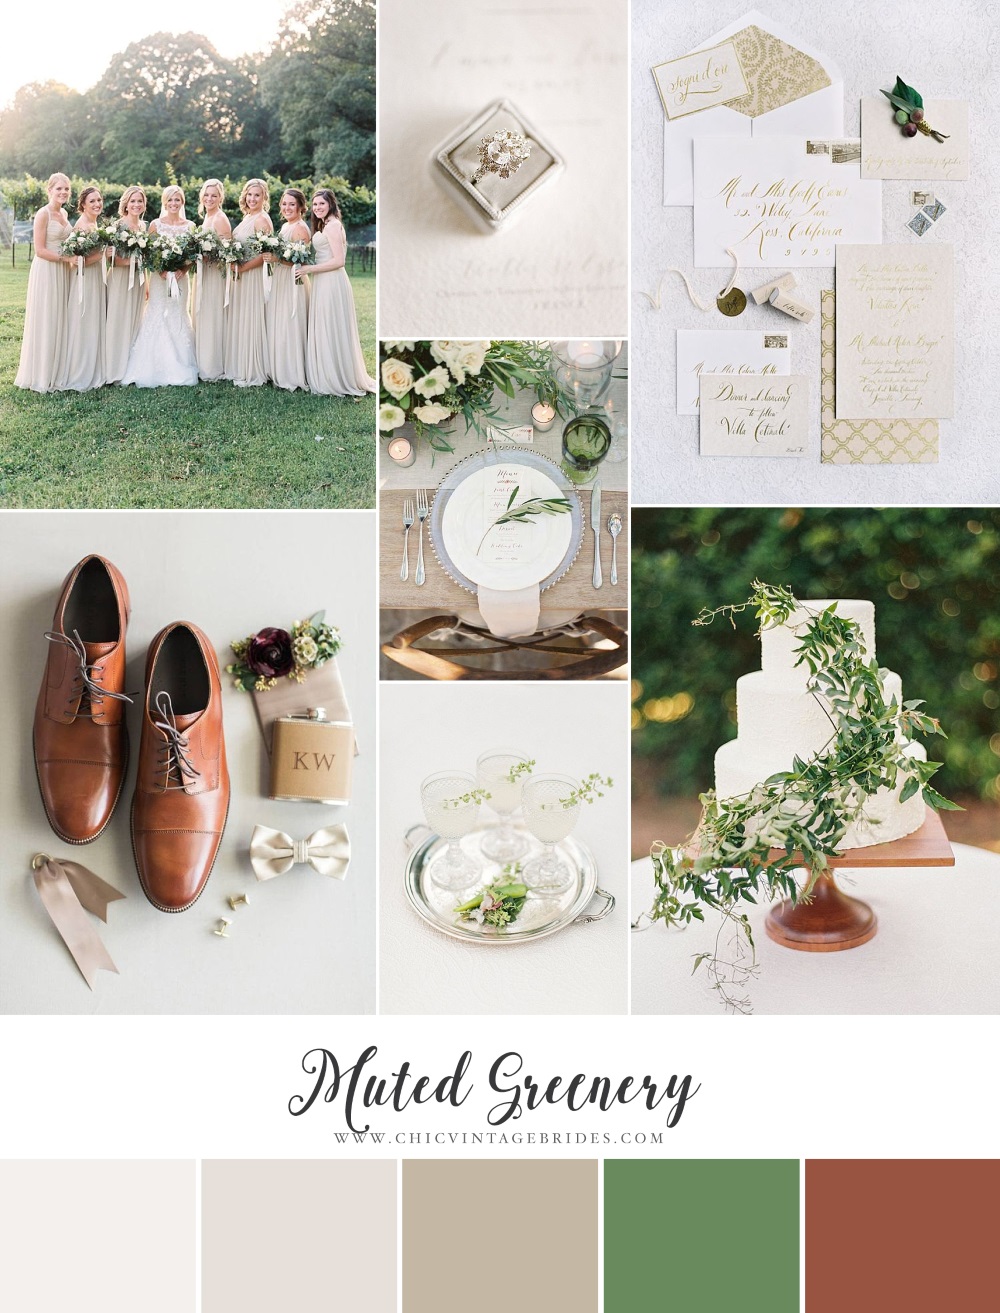 Muted Greenery - Wedding Inspiration Board